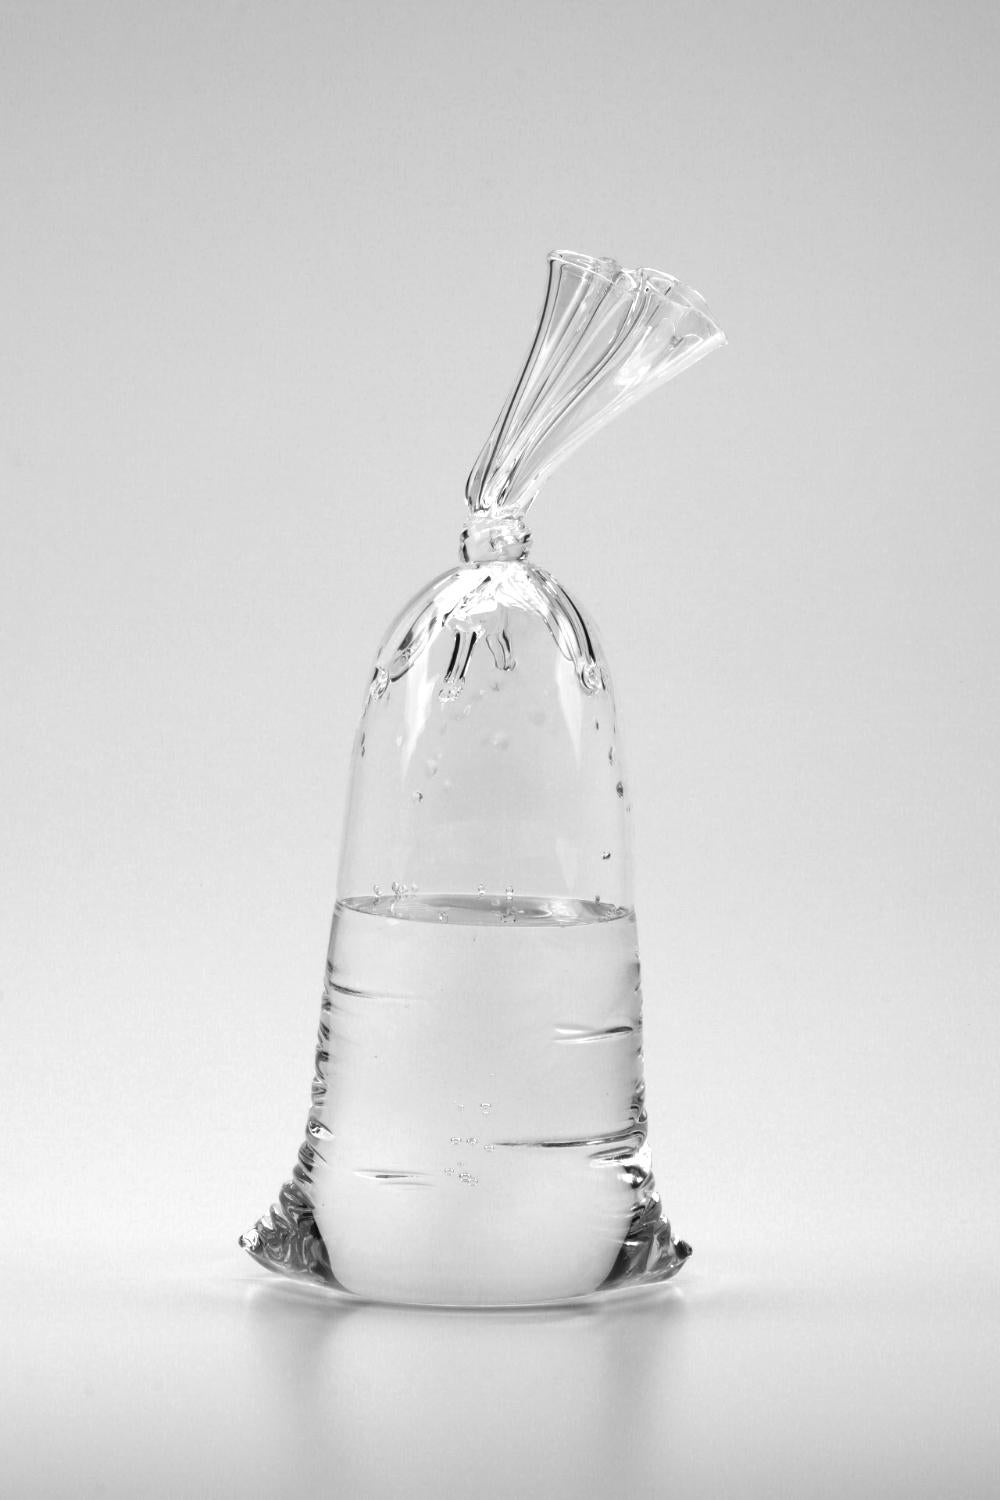 dylan martinez water bags